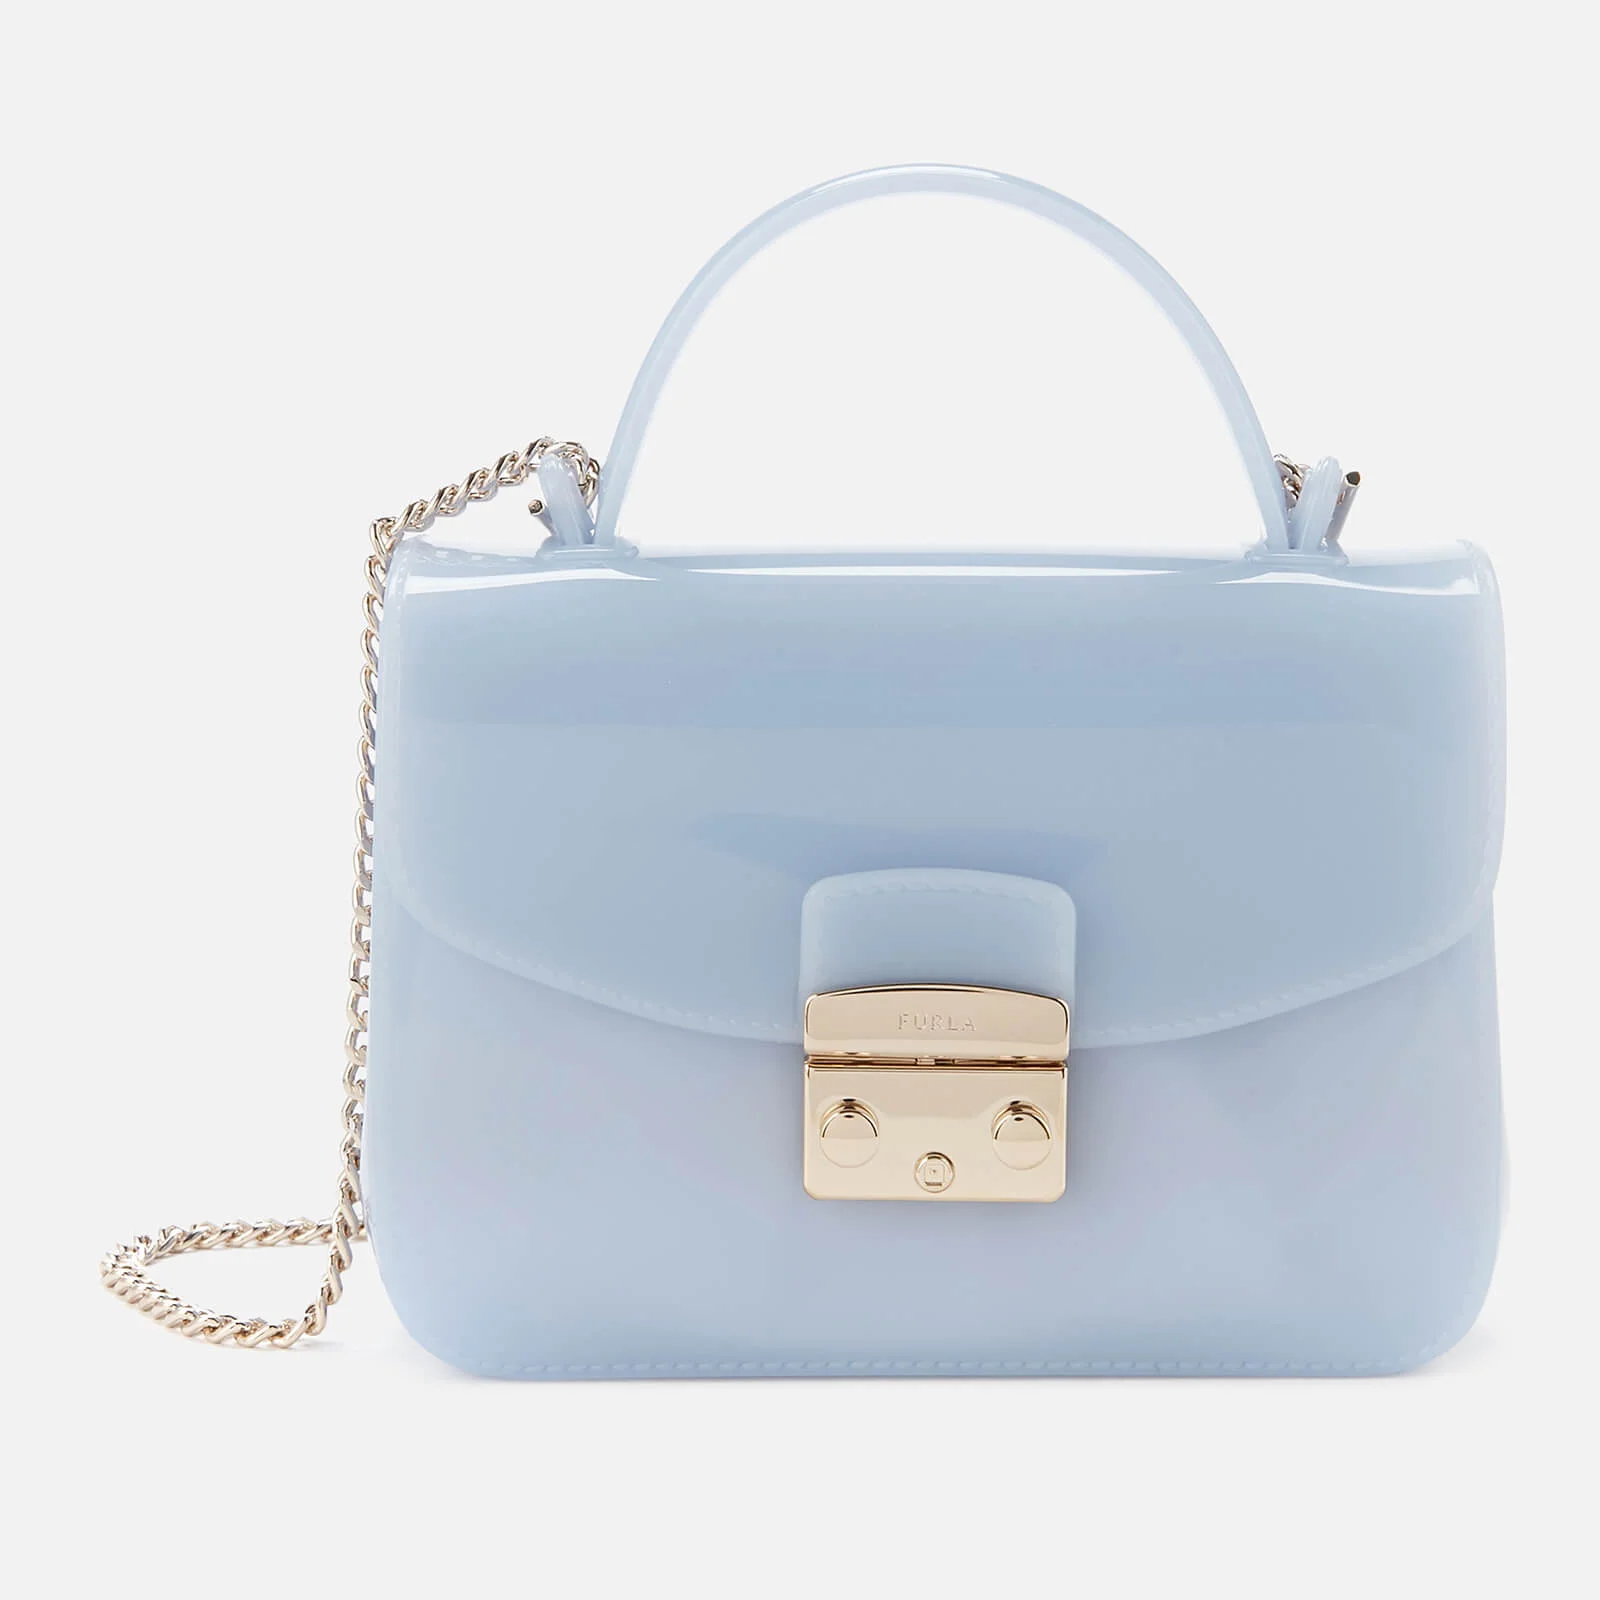 Furla Women's Candy Meringa Mini Cross Body Bag - Blue Image 1